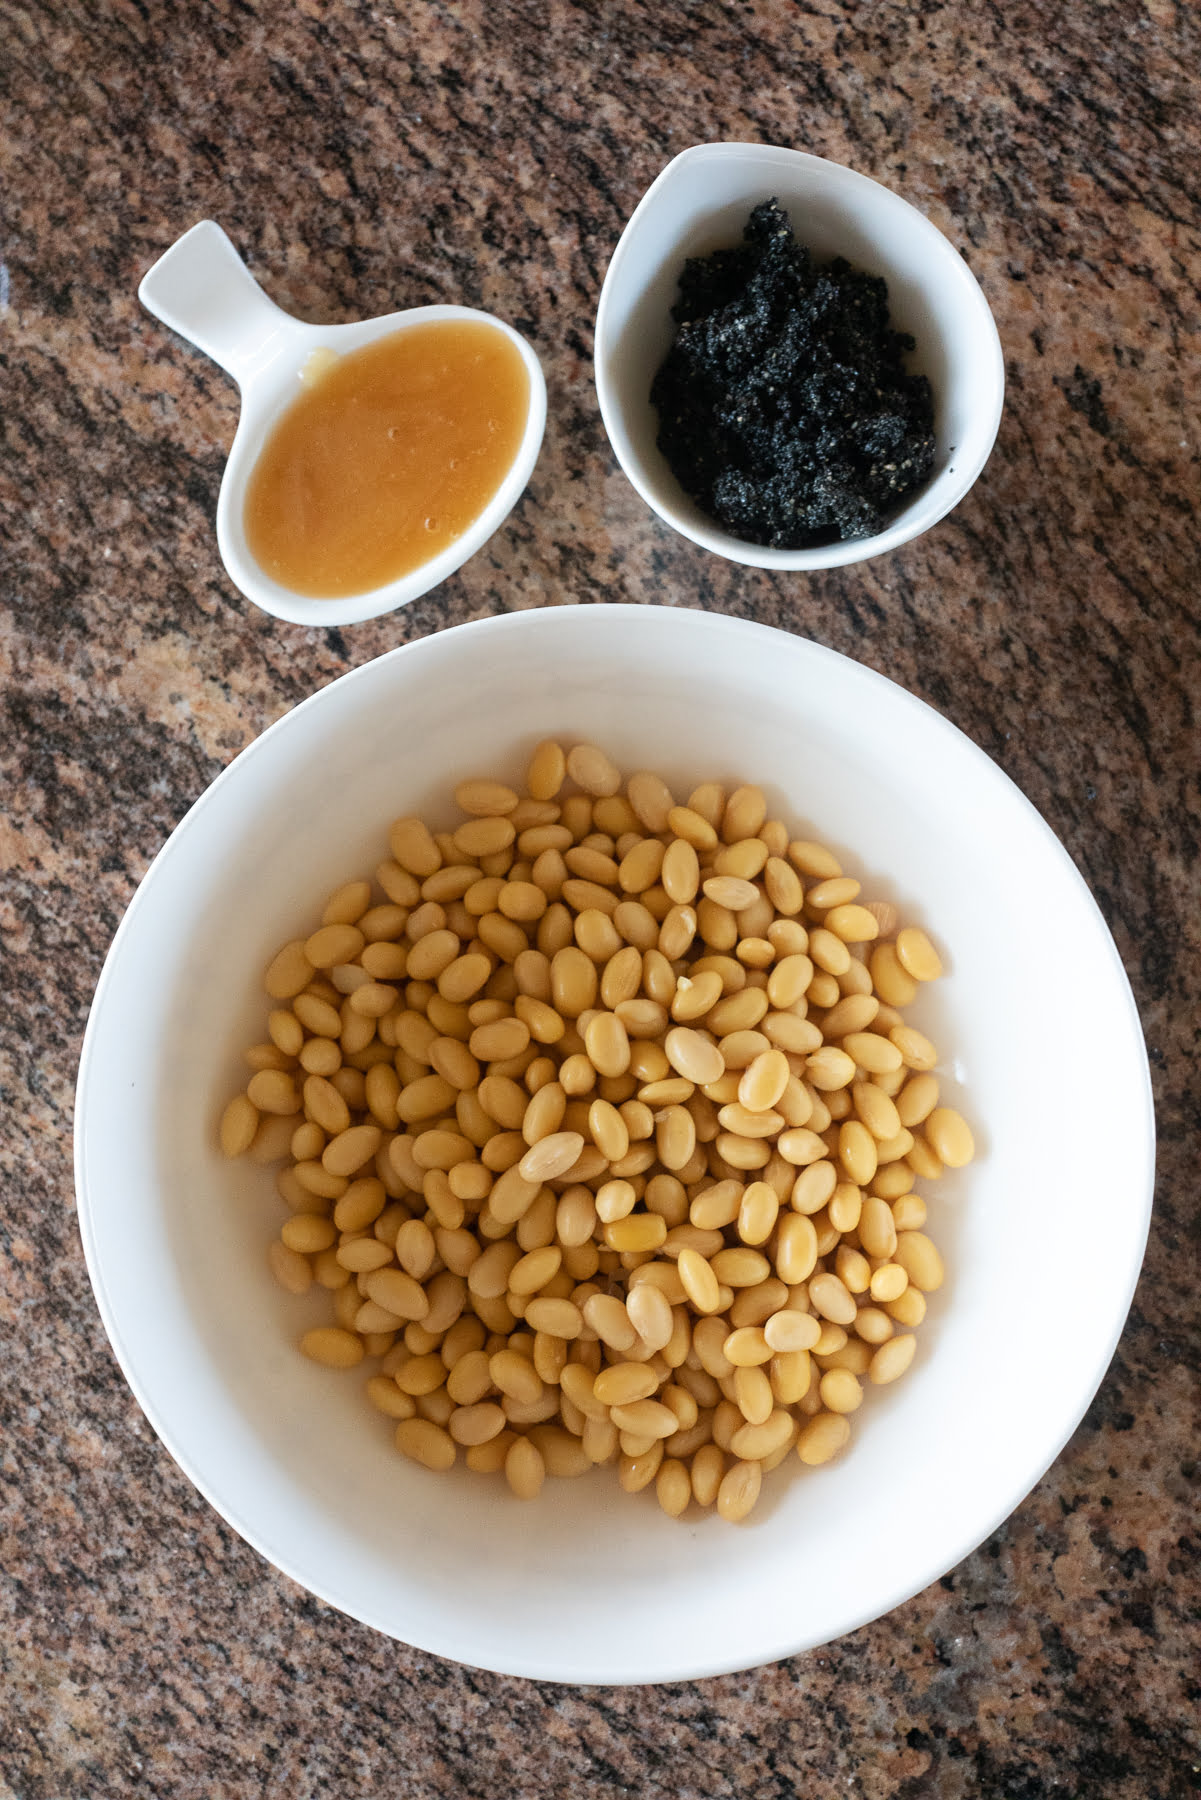 Ingredients for black sesame soy milk (soybeans, black sesame paste, and honey).